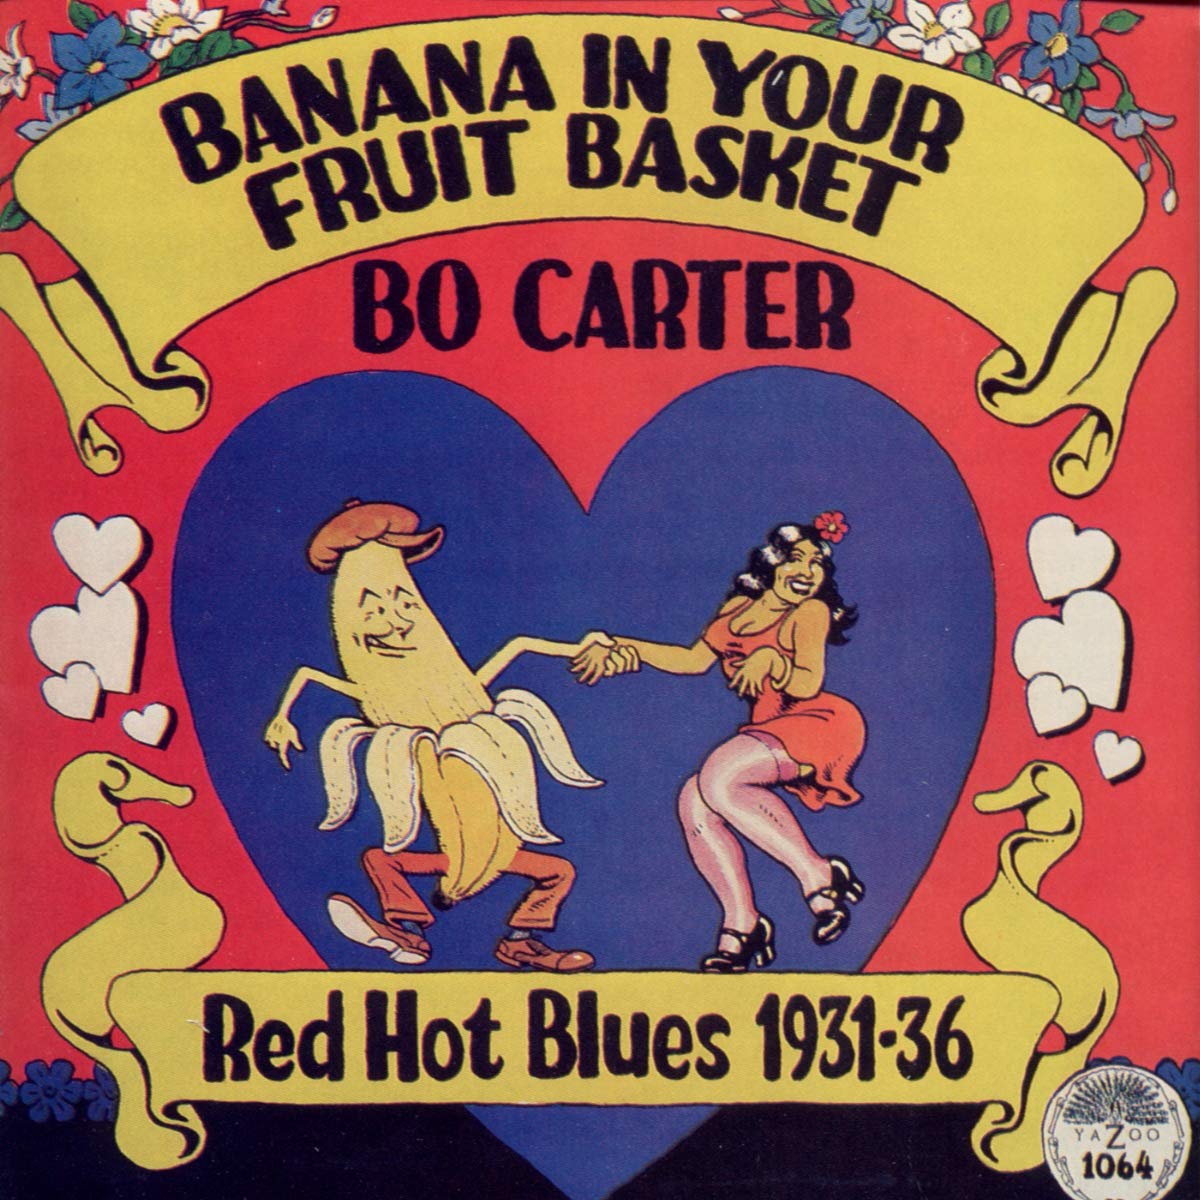 Bo Carter - Banana In Your Fruit Basket: Red Hot Blues 1931-36 LP